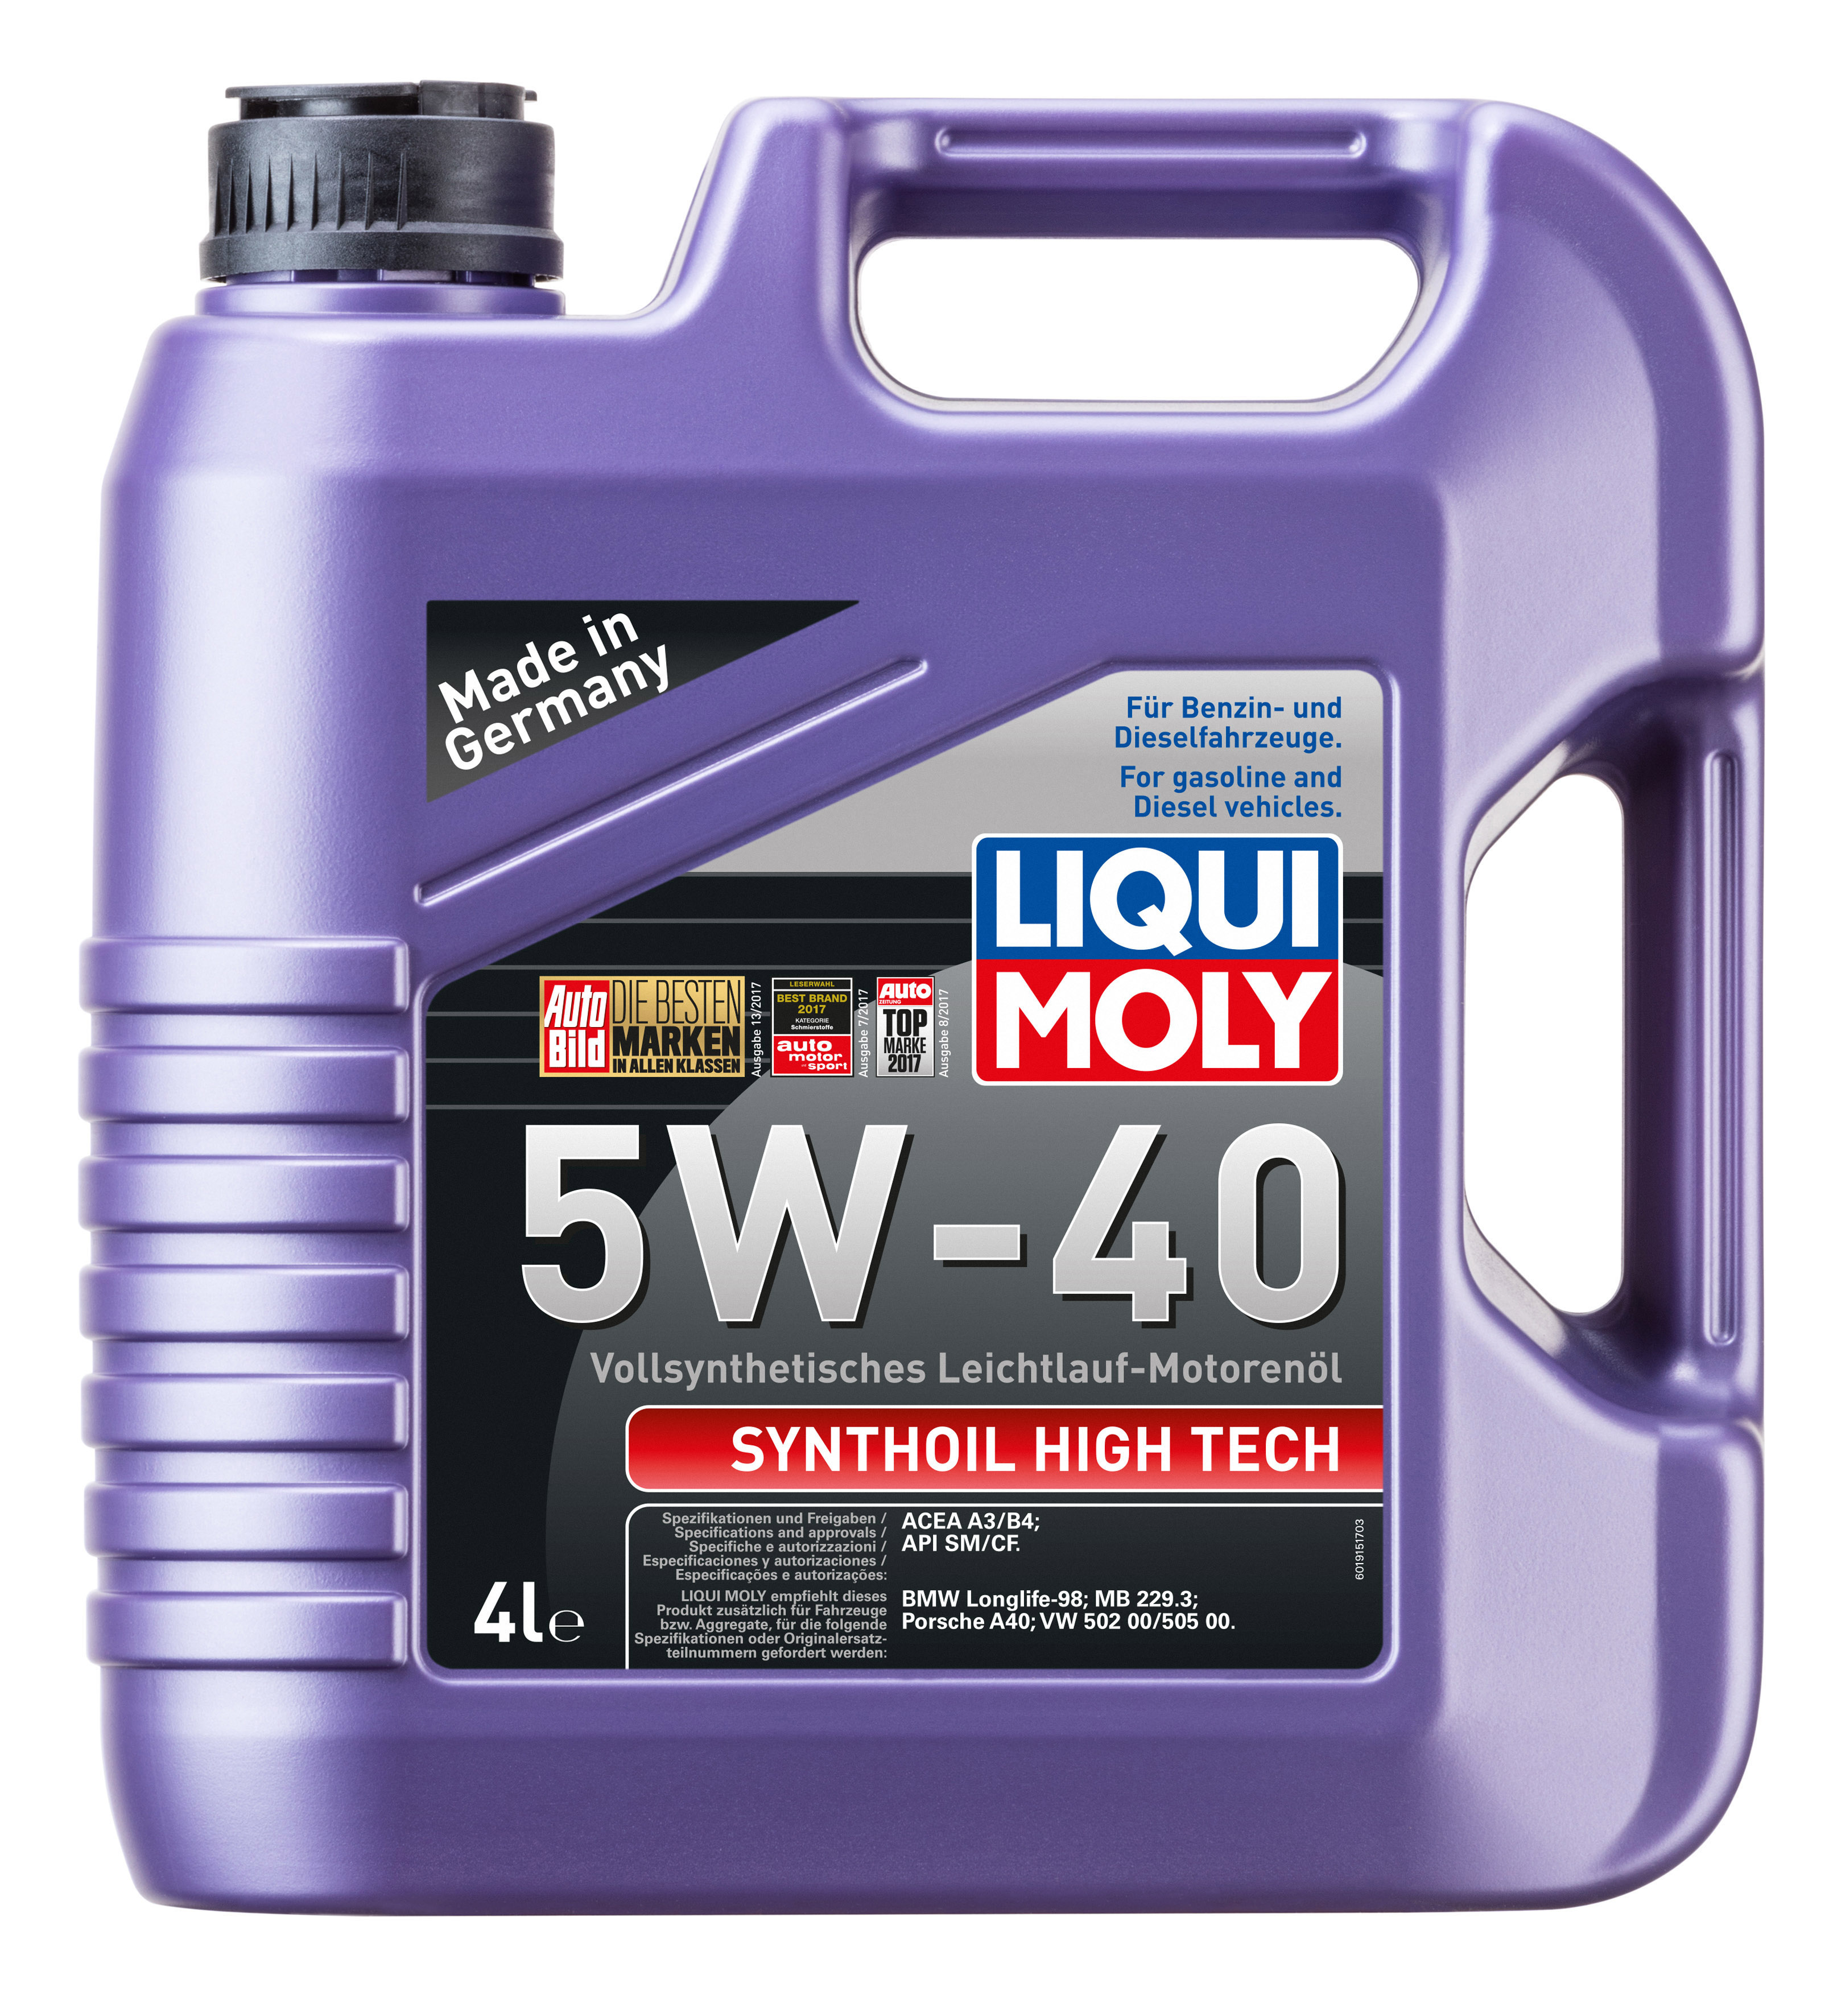  2194 Liqui Moly Синтетическое моторное масло Synthoil High Tech 5W-40 4л 